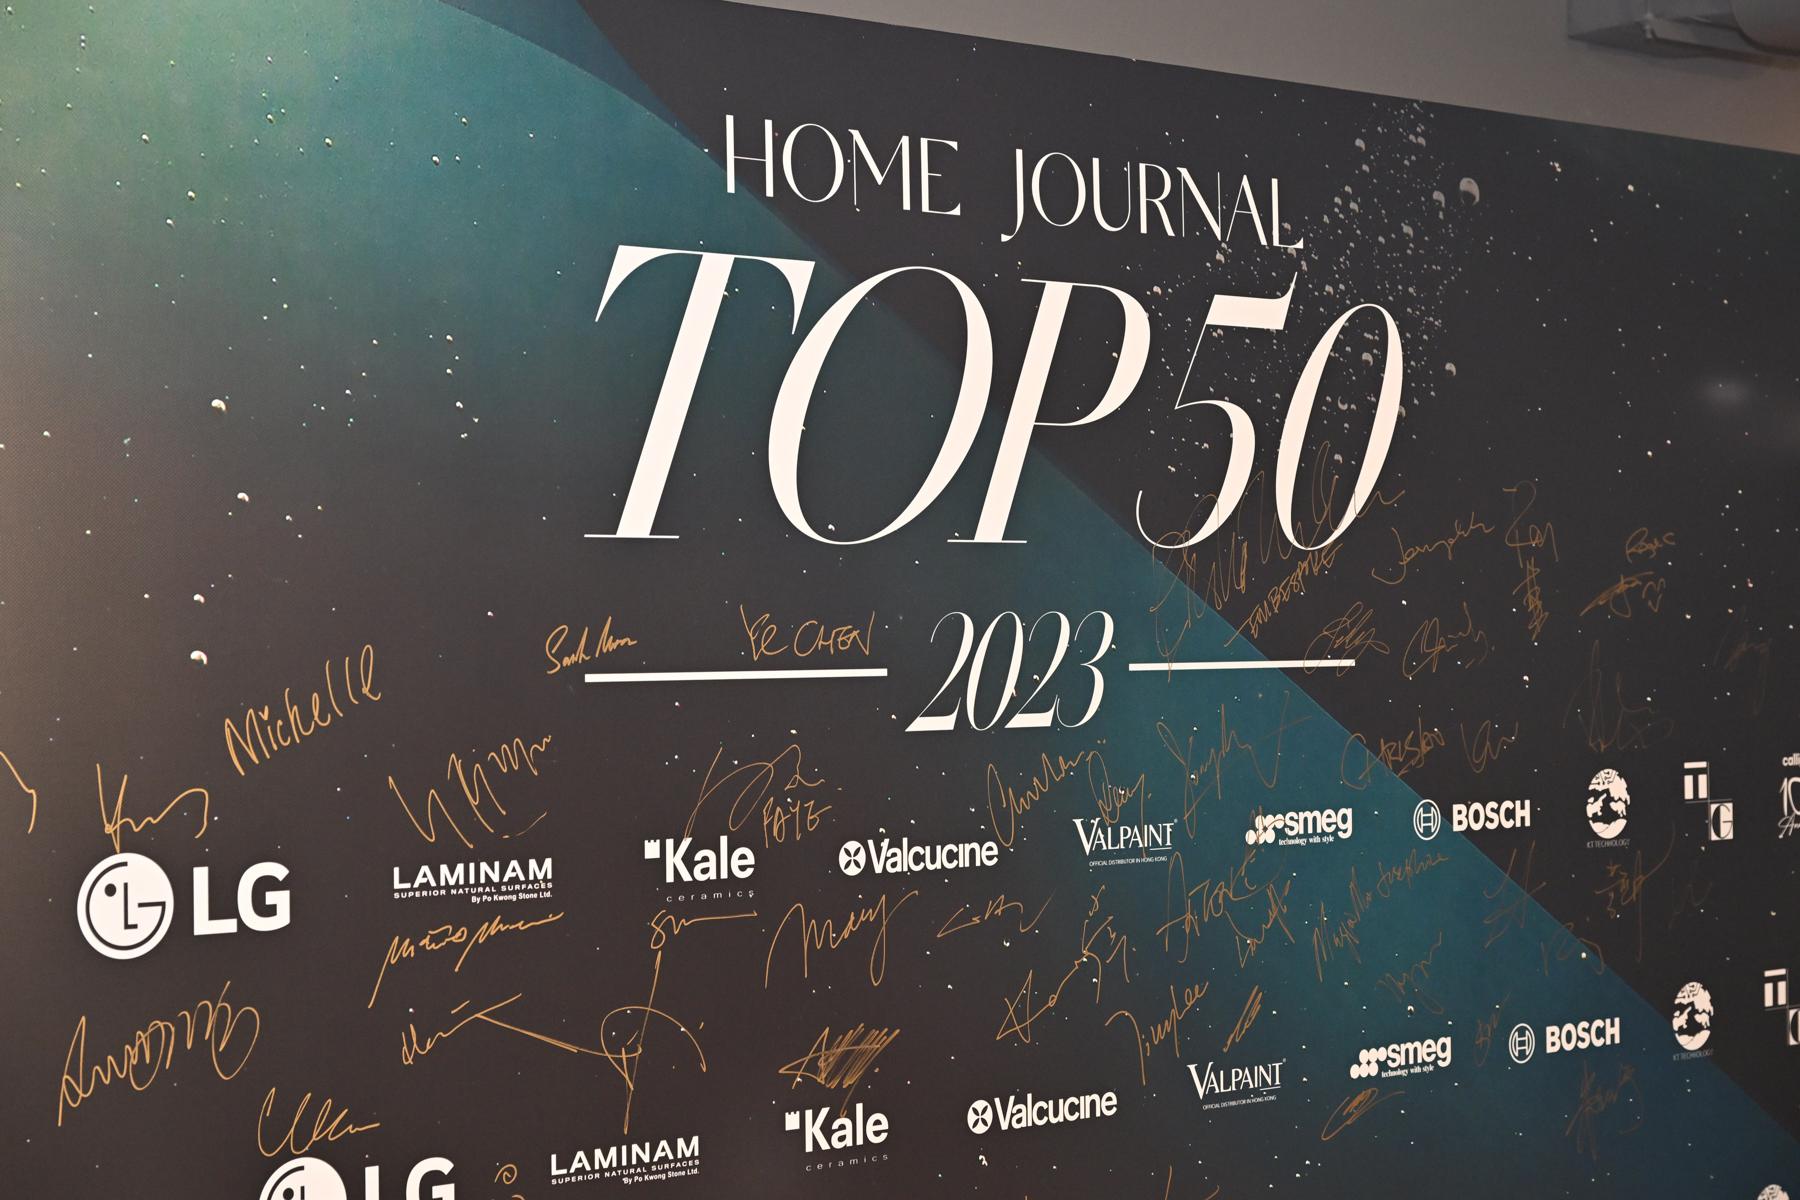 Home Journal Top 50 Cocktail Soirée匯聚建築及室內設計界精英